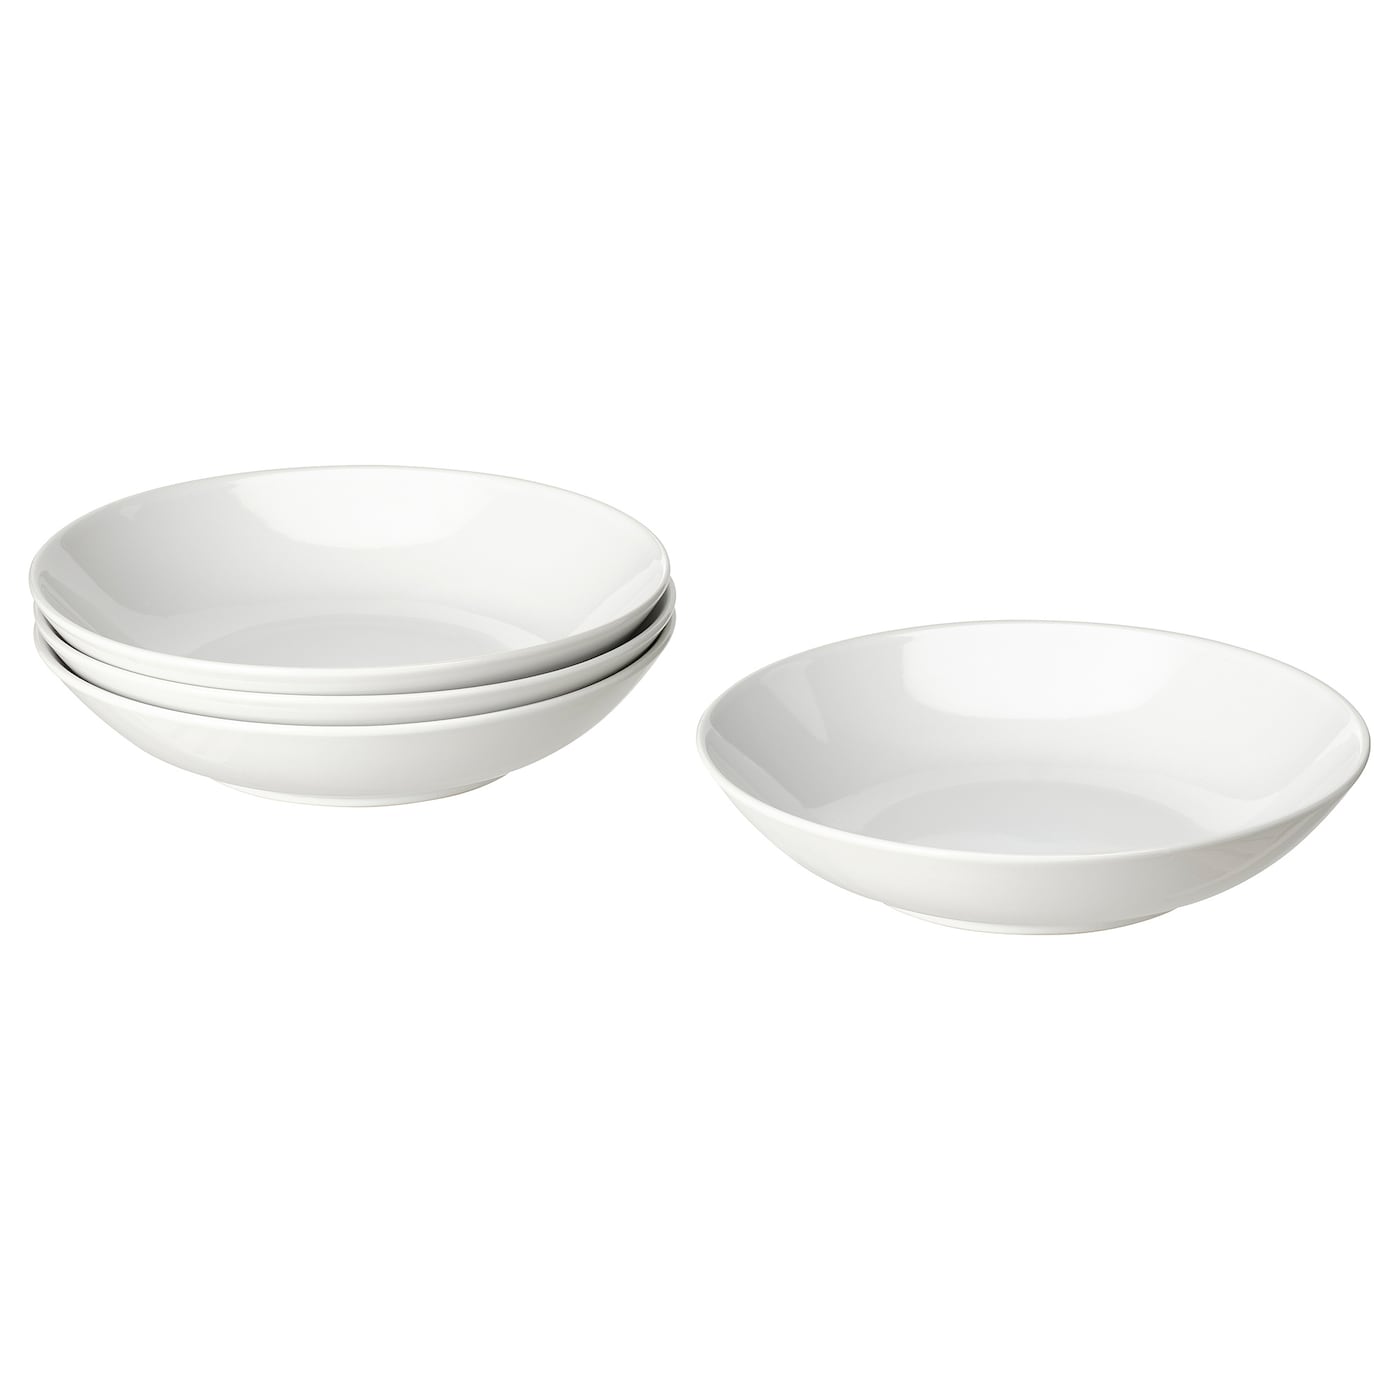 Набор тарелок, 4 шт. - IKEA GODMIDDAG, 23 см, белый, ГОДМИДДАГ ИКЕА